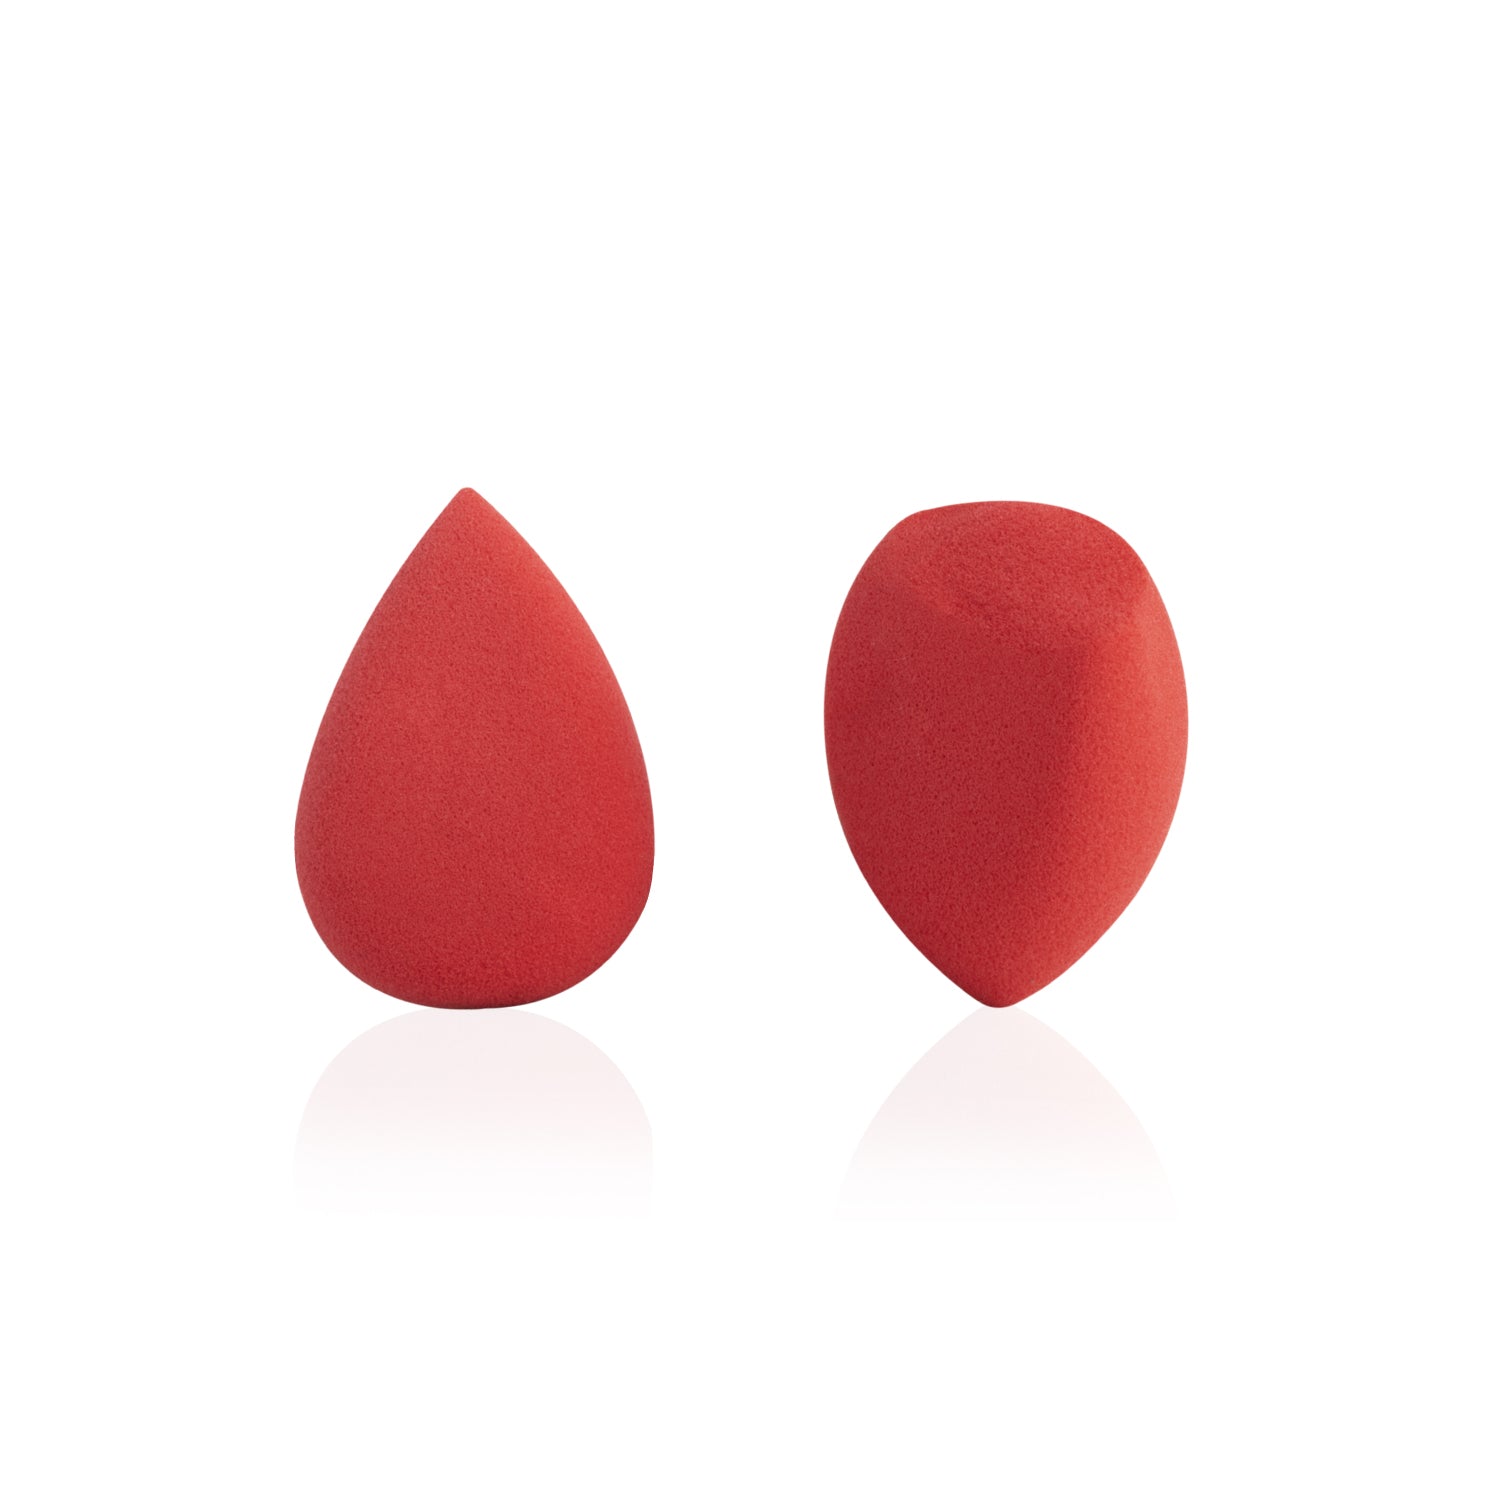 PAC Cosmetics Mini Sponge Set (Water Drop, Olive Cut) (Red) (2 Pc)